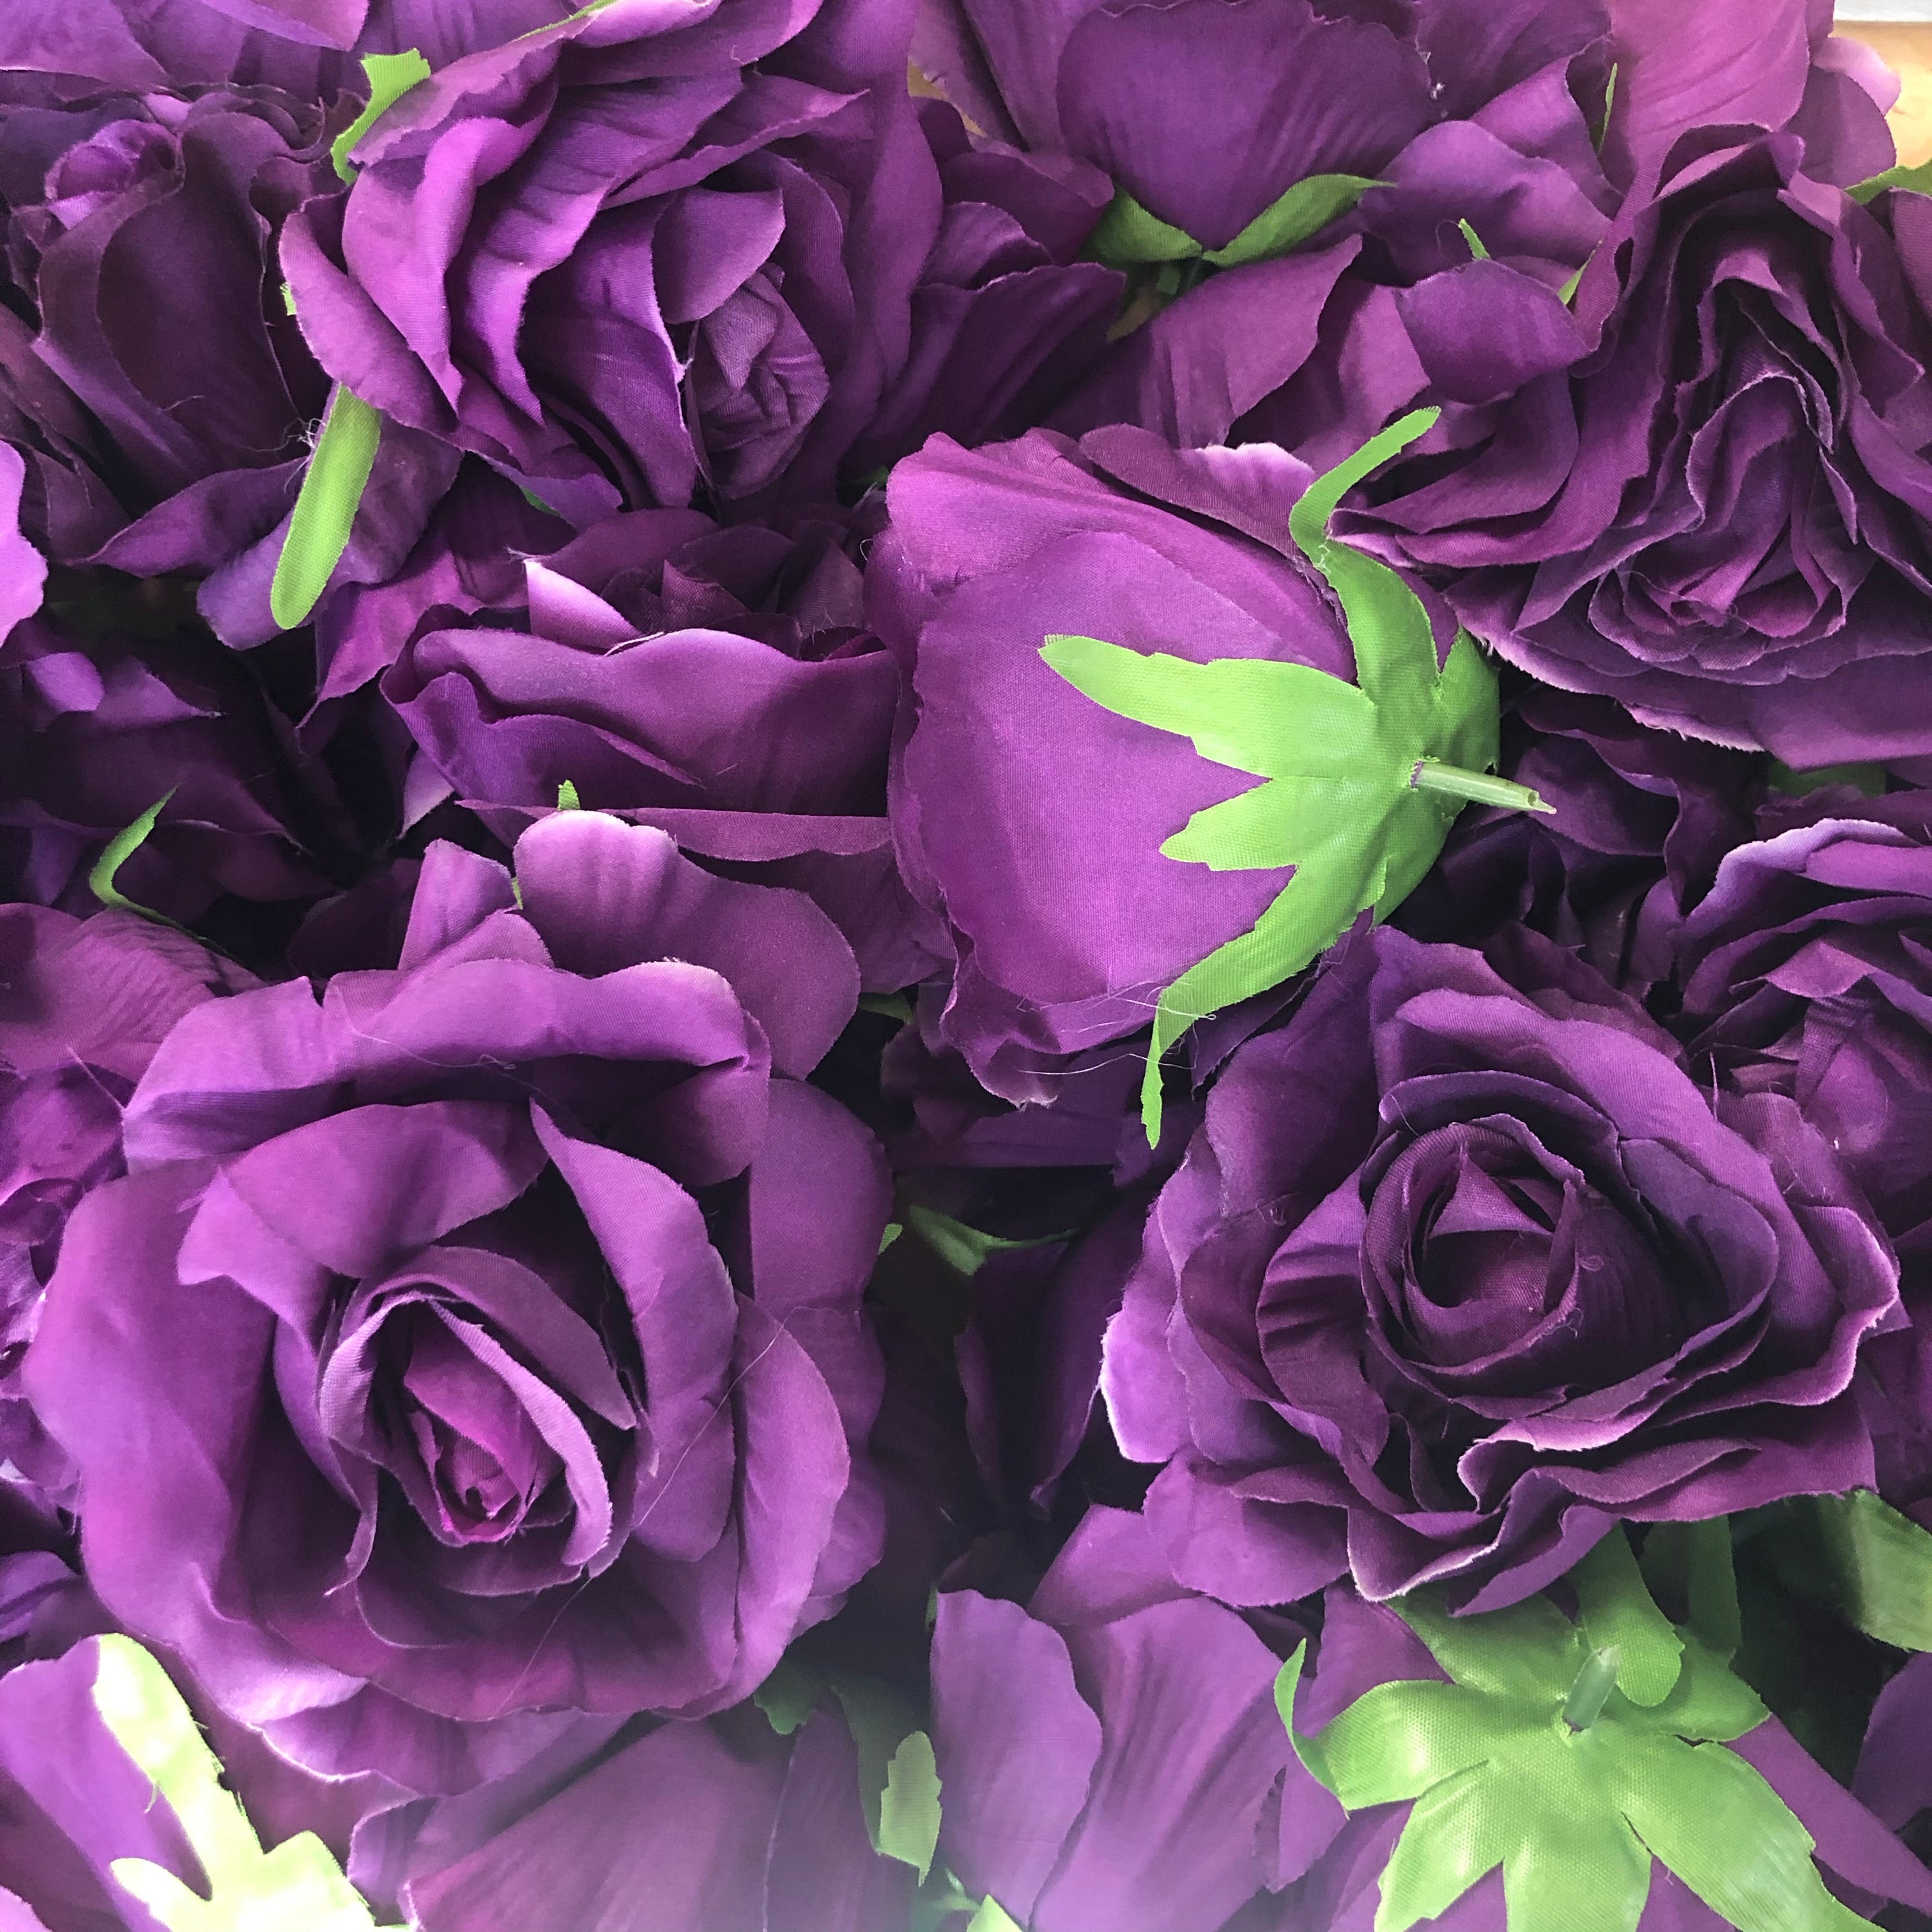 Artificial Silk Flower Head - Purple Rose Style 102 - 1pc